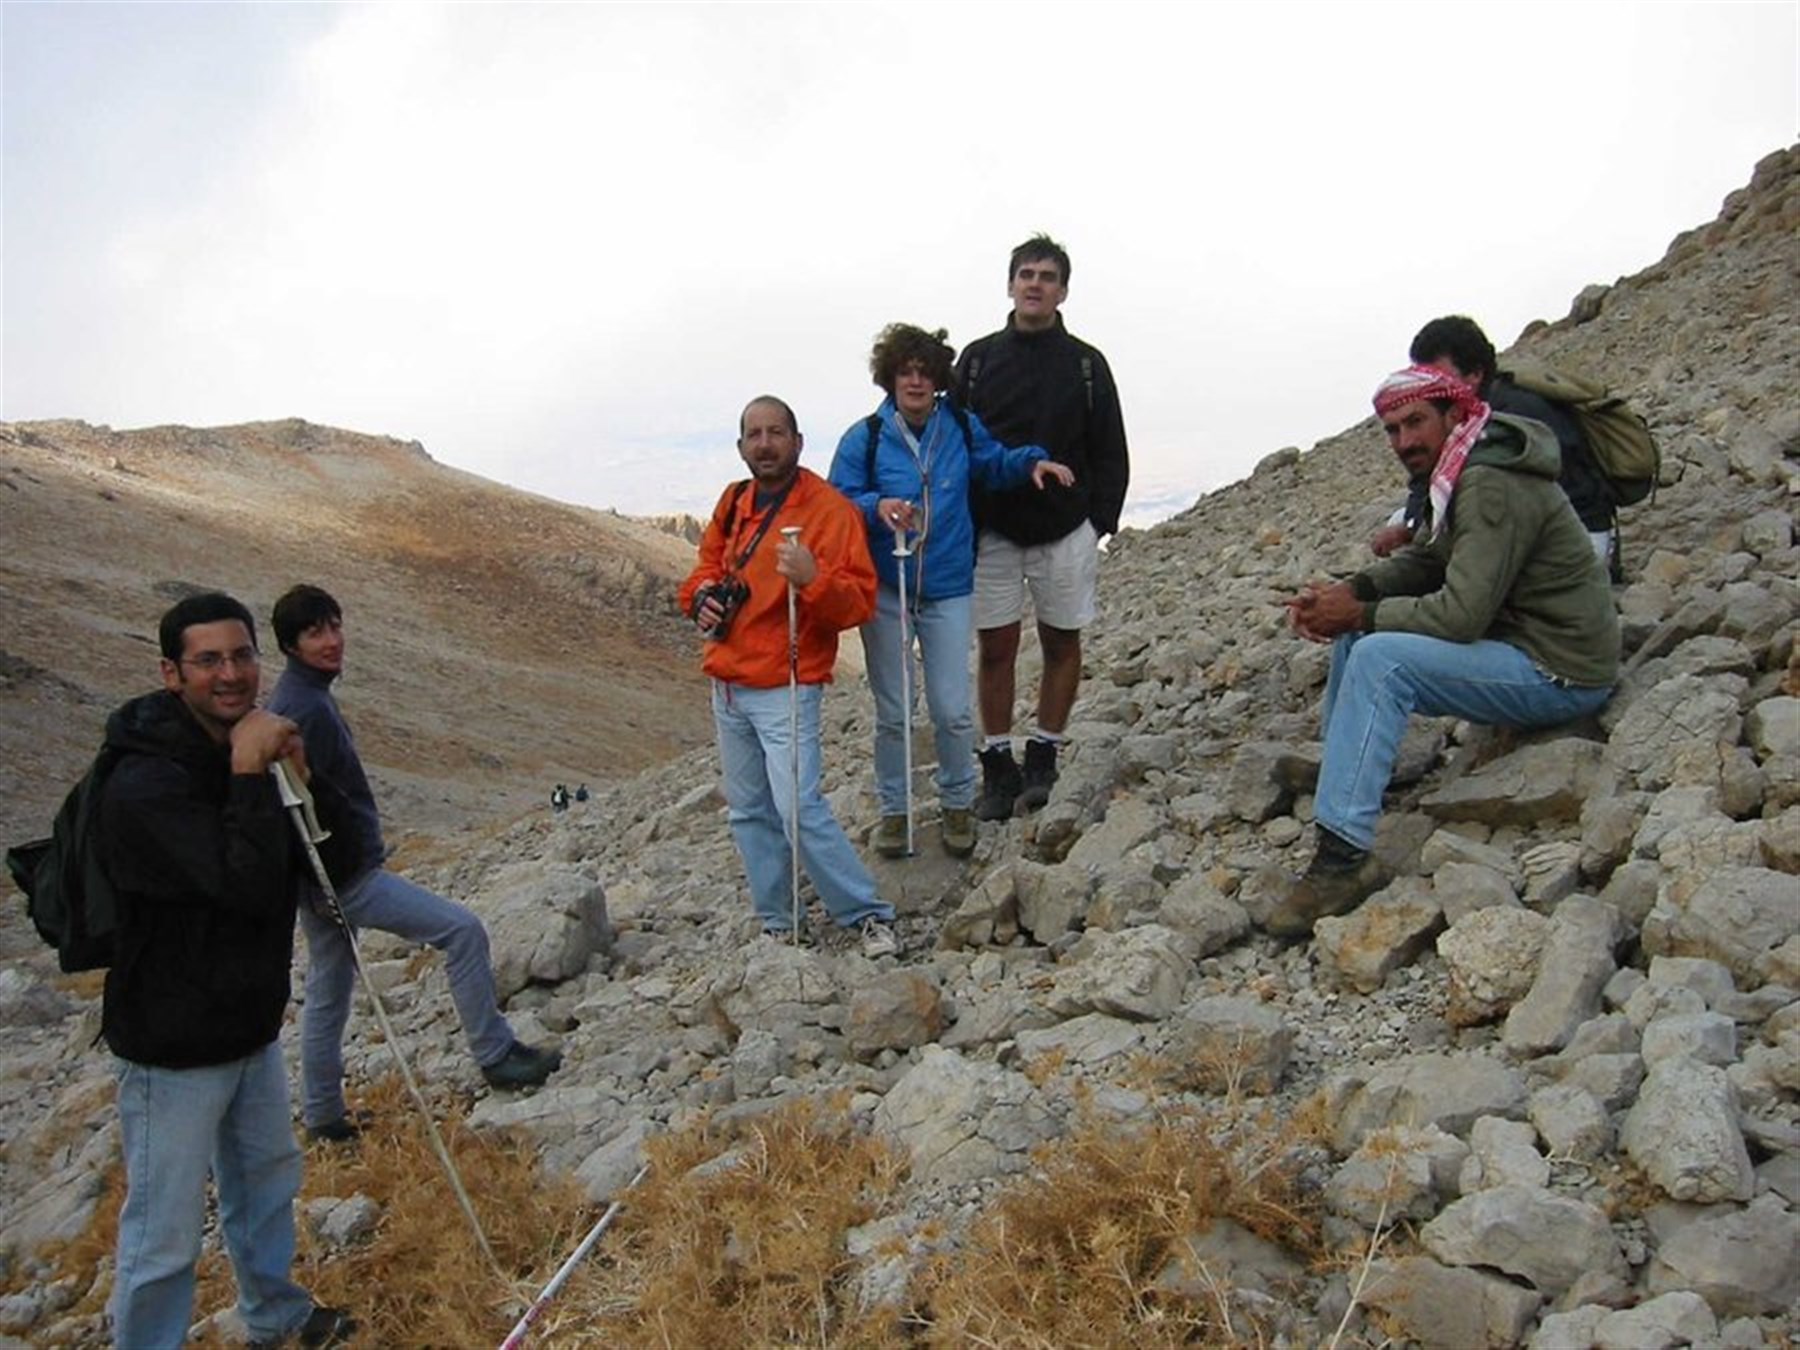 Mount Hermon, personal hike (photo: Mona Fawaz, 2003)